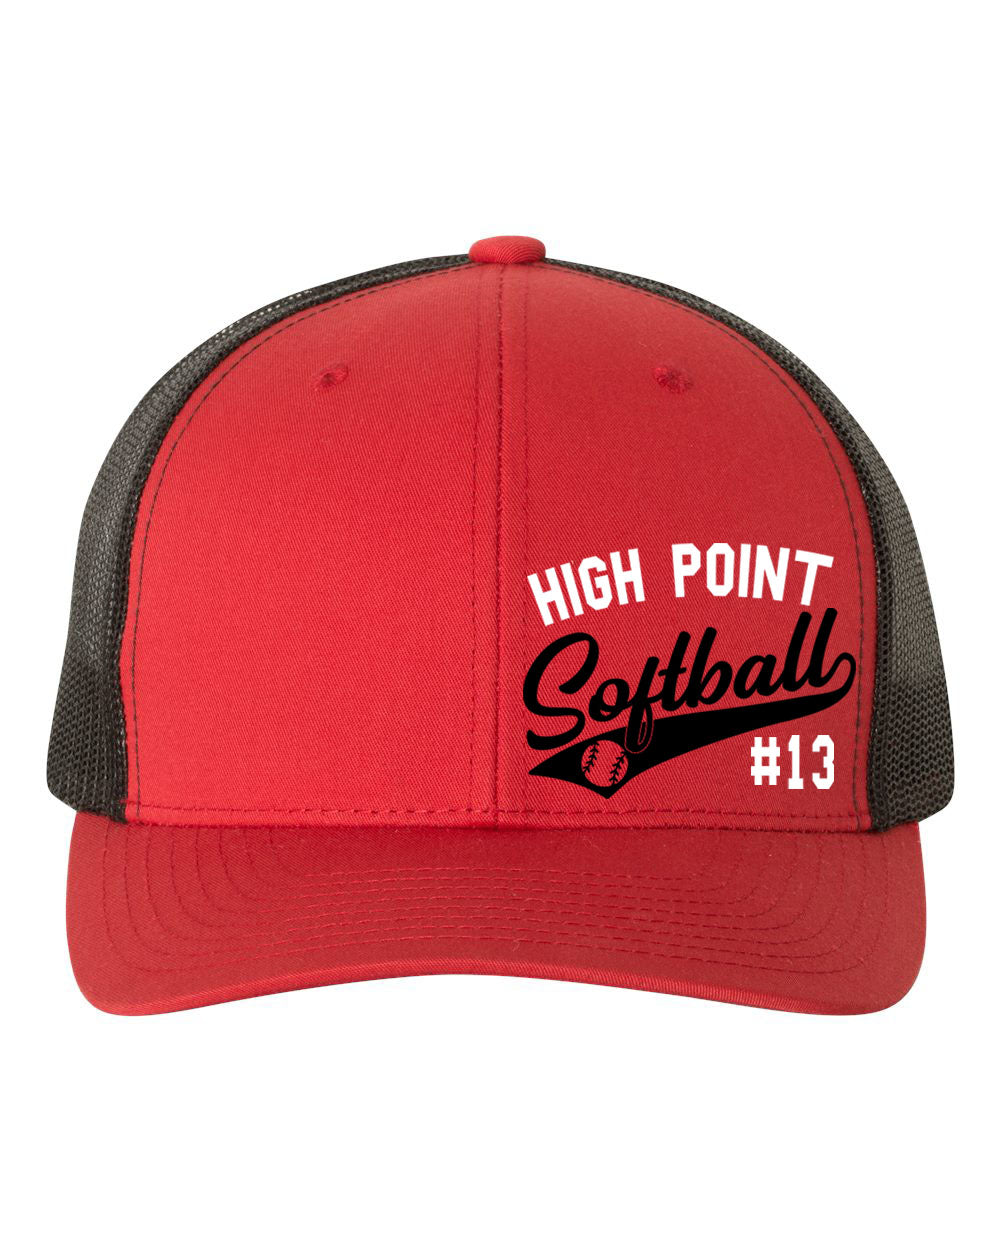 High Point Softball Design 2 Trucker Hat